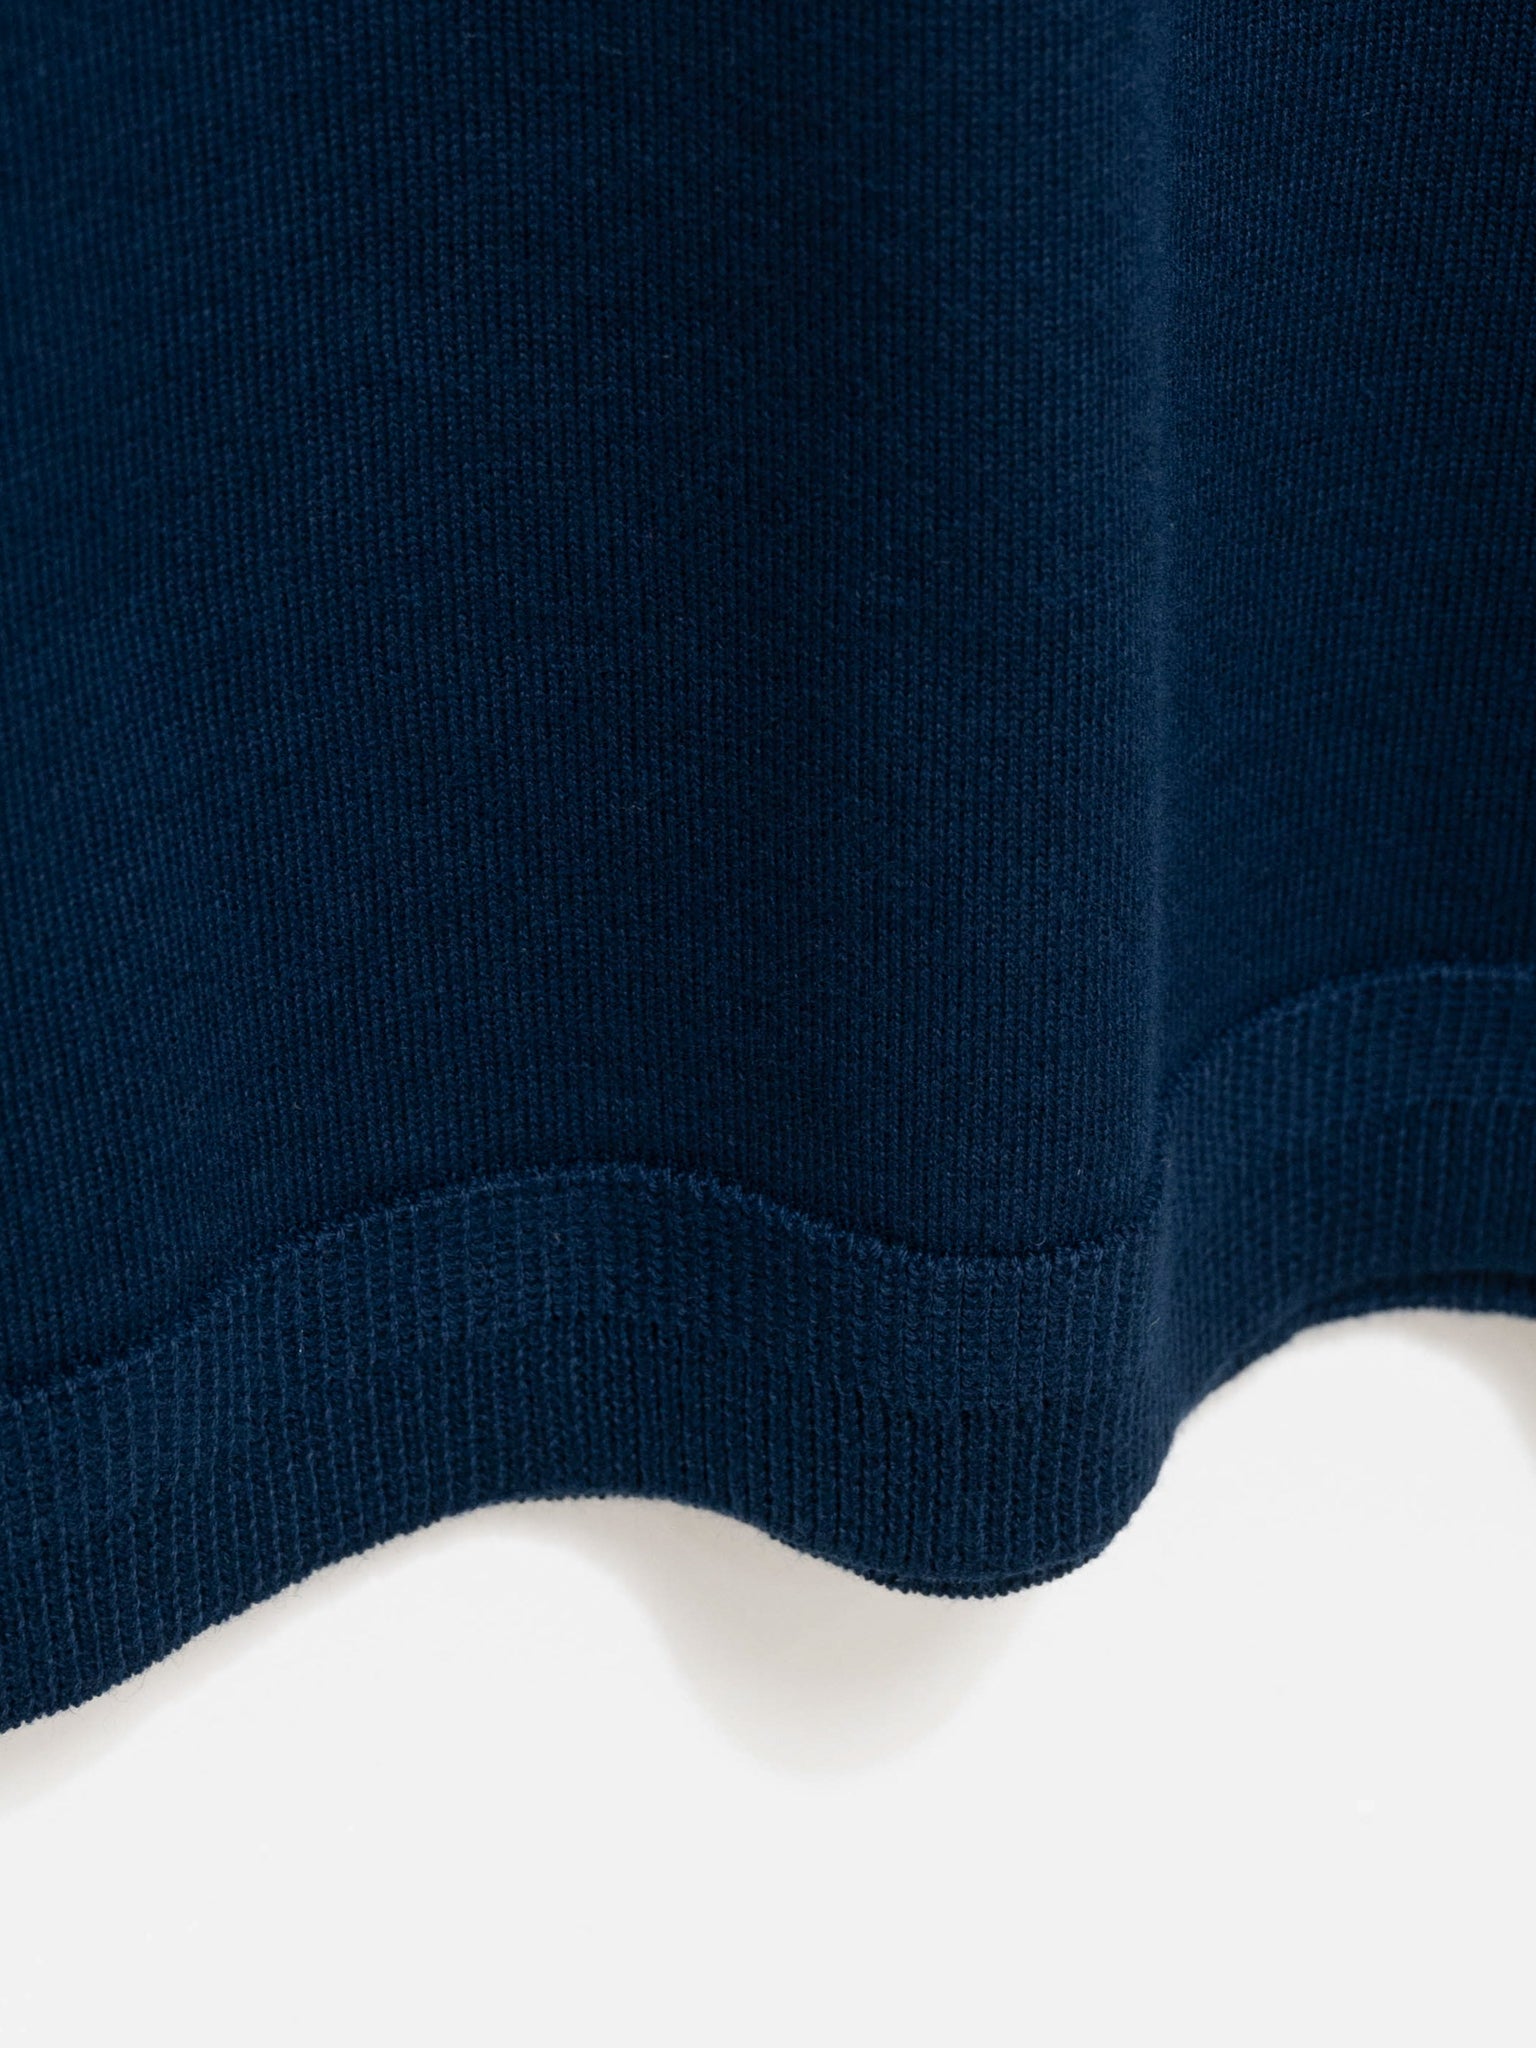 Namu Shop - Fujito Knit T-Shirt - Navy